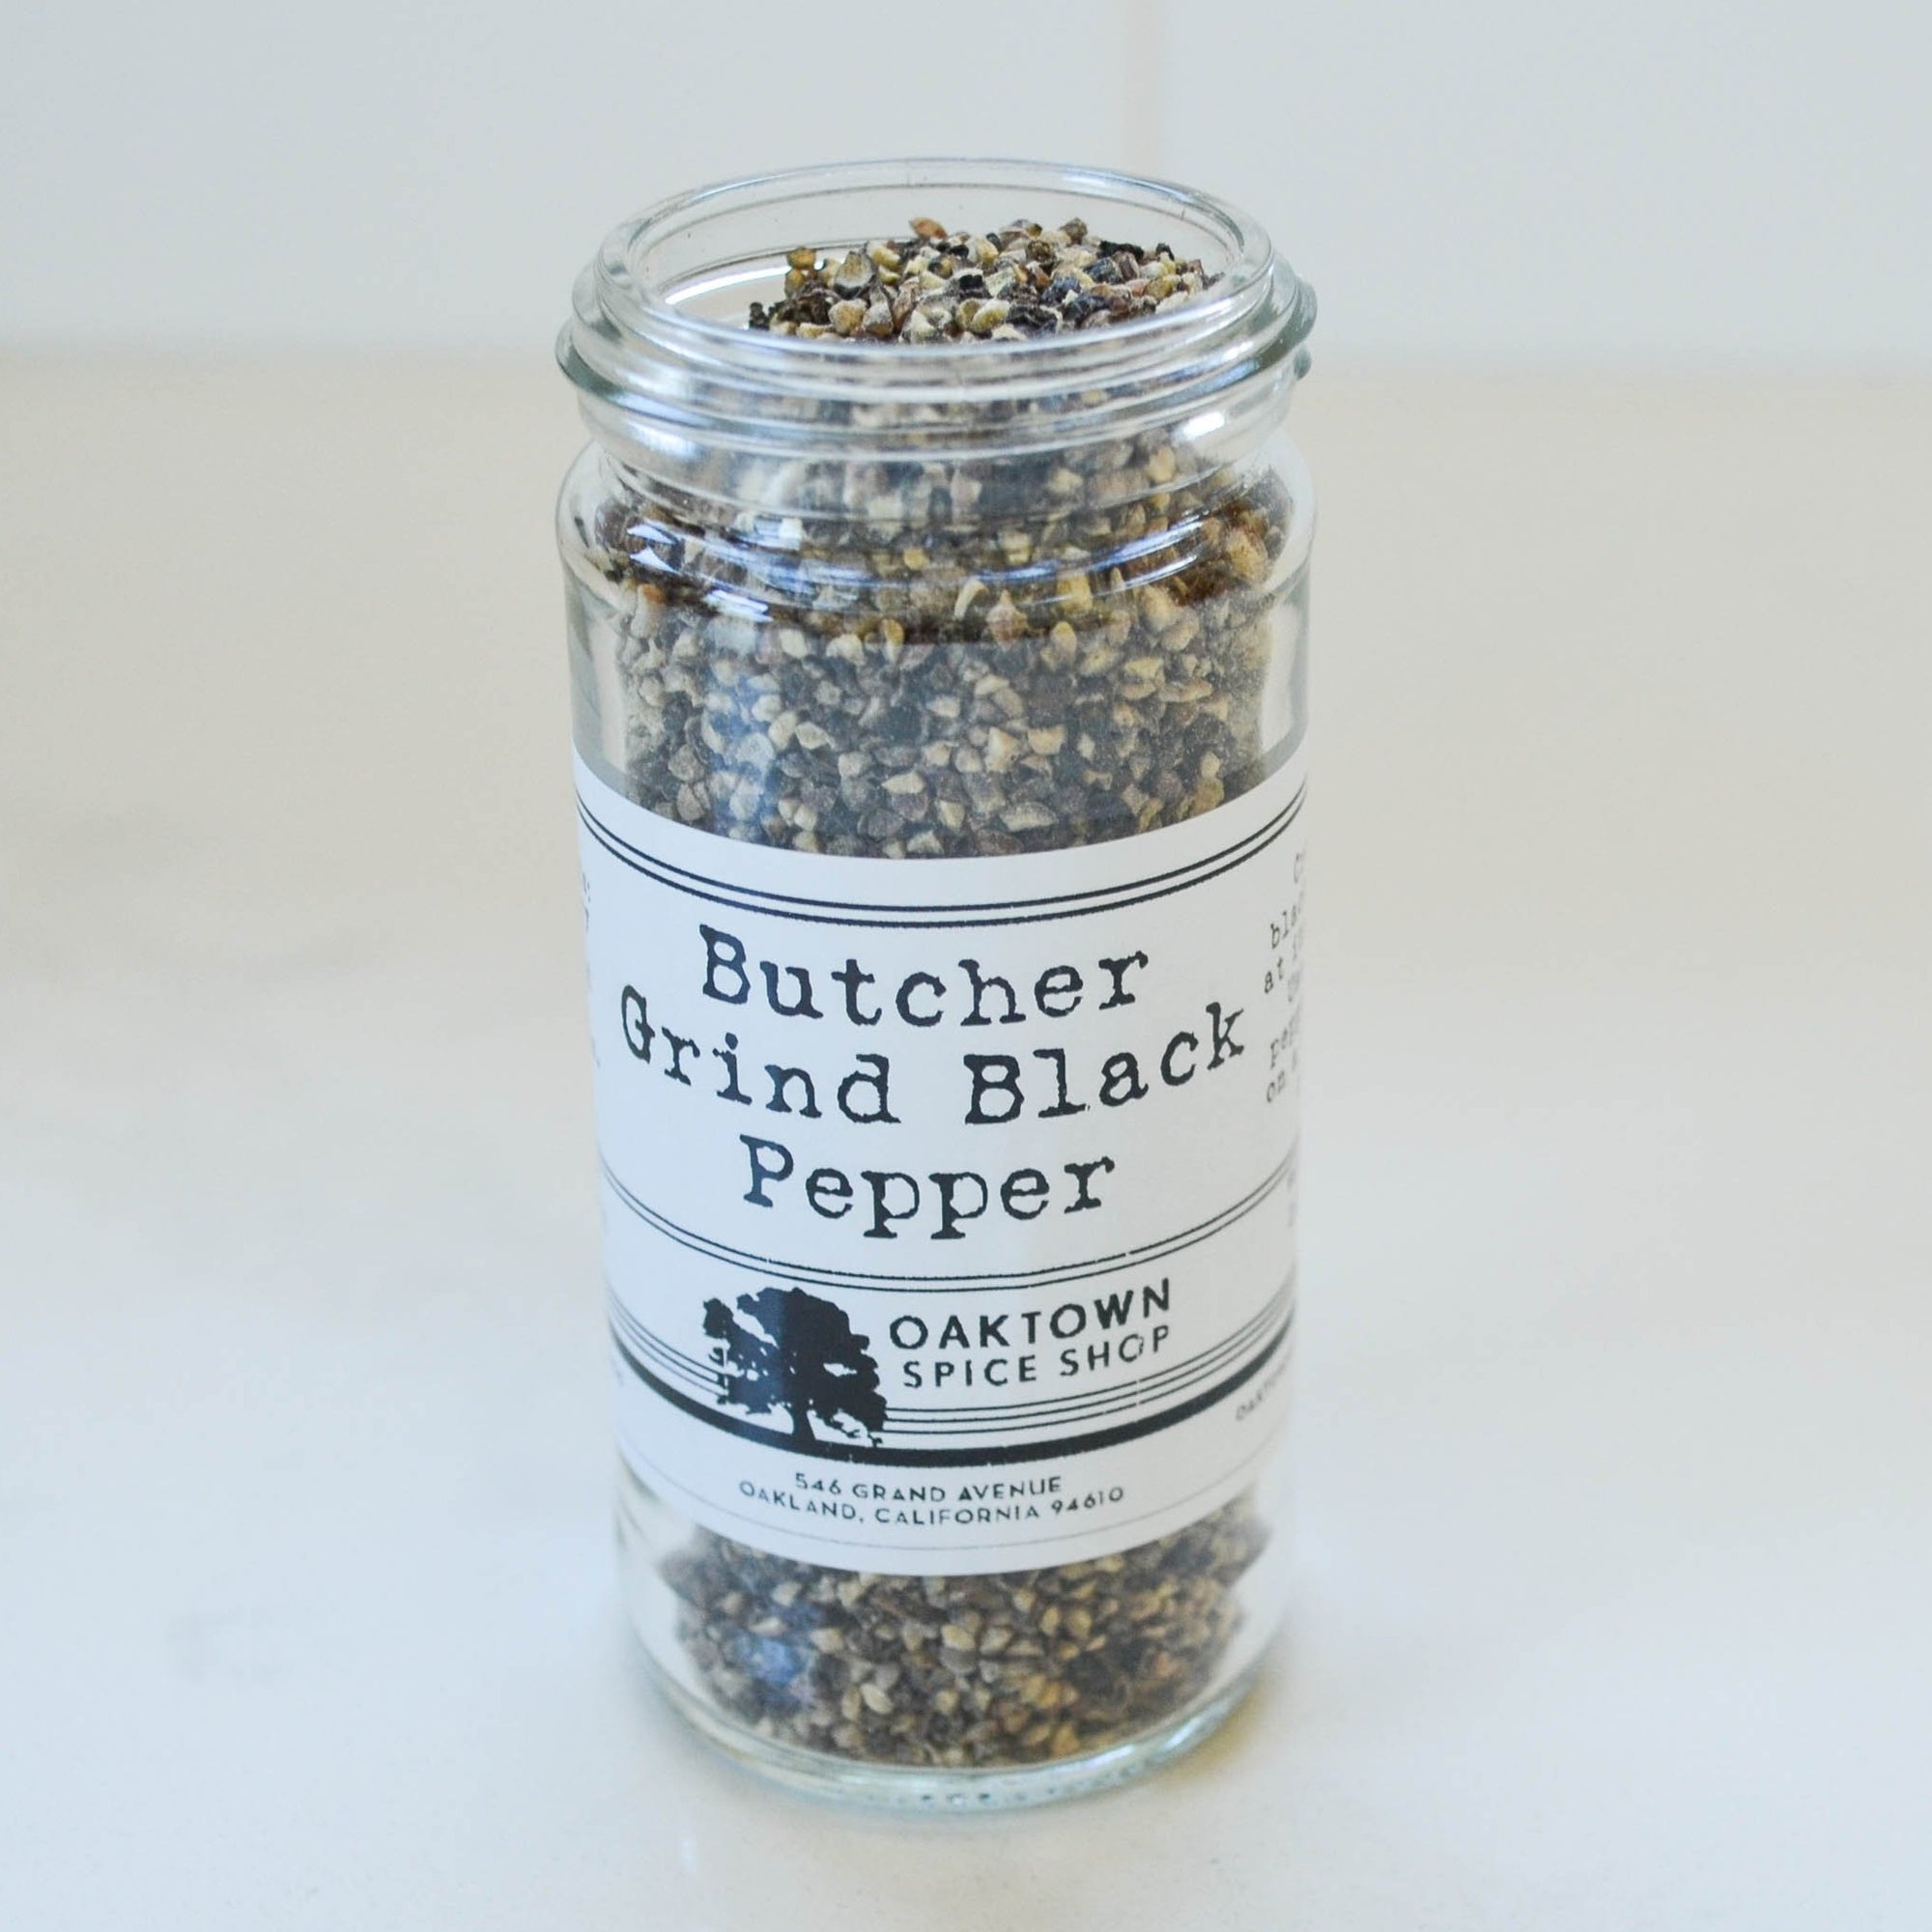 Butcher Grind Black Pepper is Cracked Black Pepper at its finest from Oaktown Spice Shop